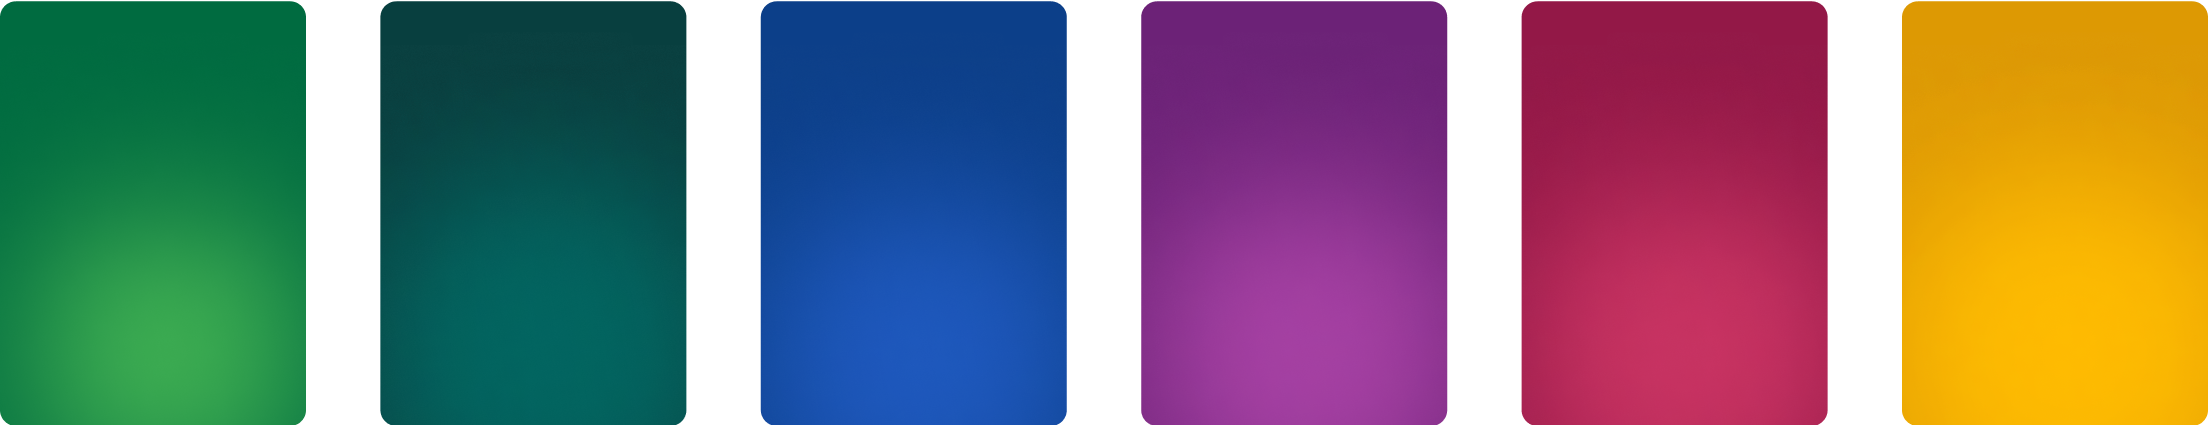 Example of tone on tone gradients